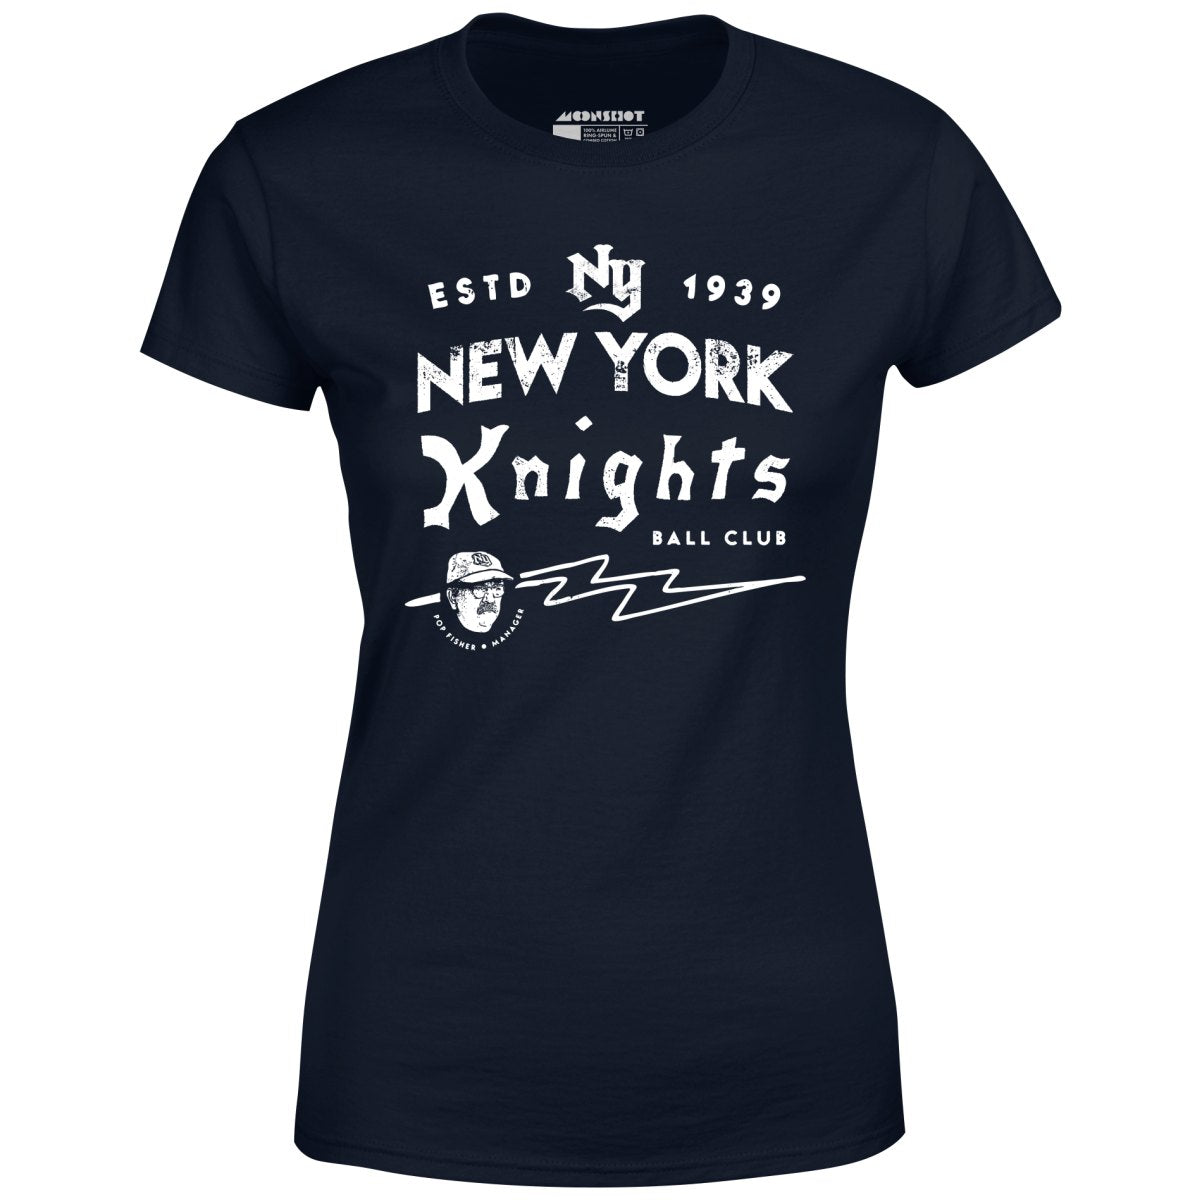 New York Knights Ball Club - Women's T-Shirt